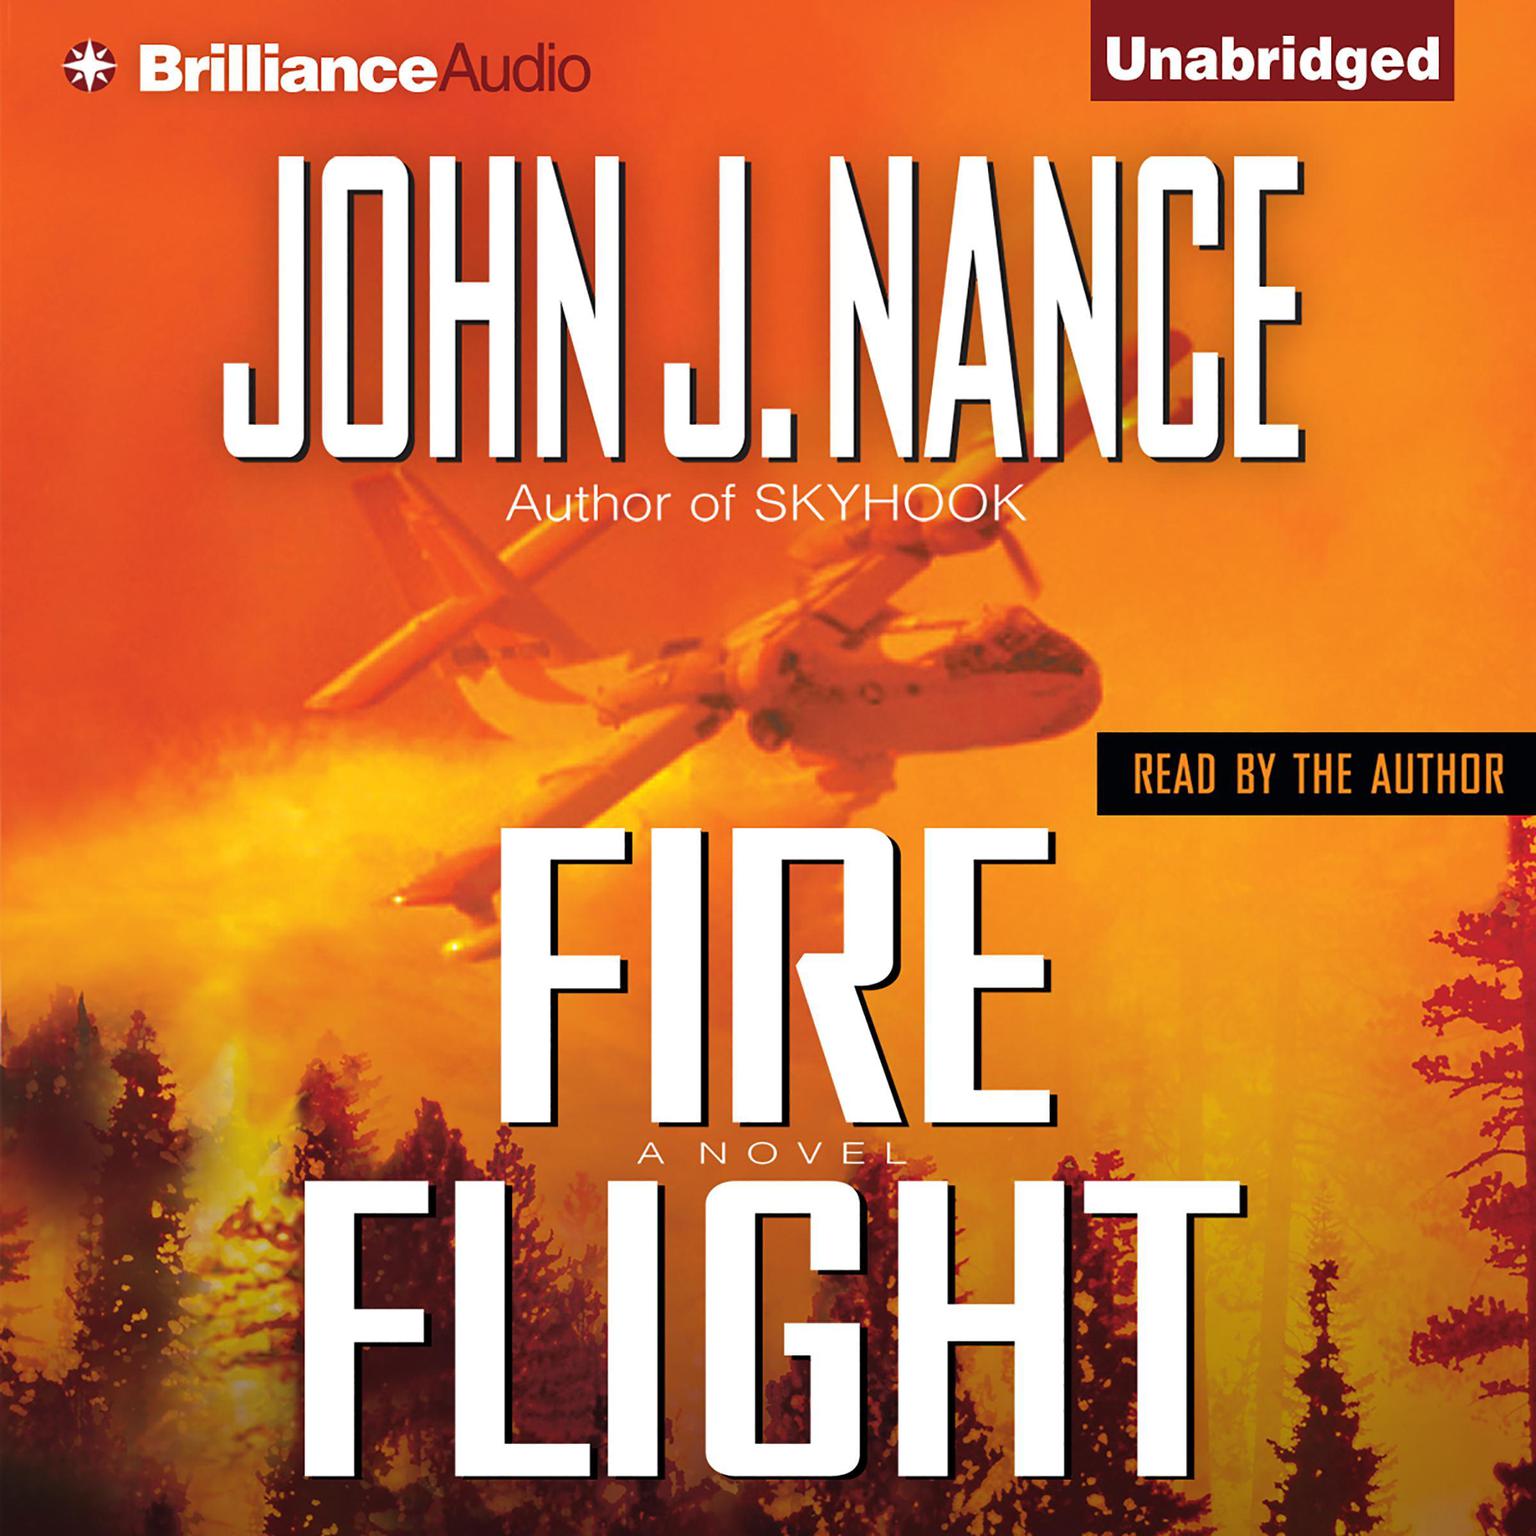 Fire Flight Audiobook, by John J. Nance